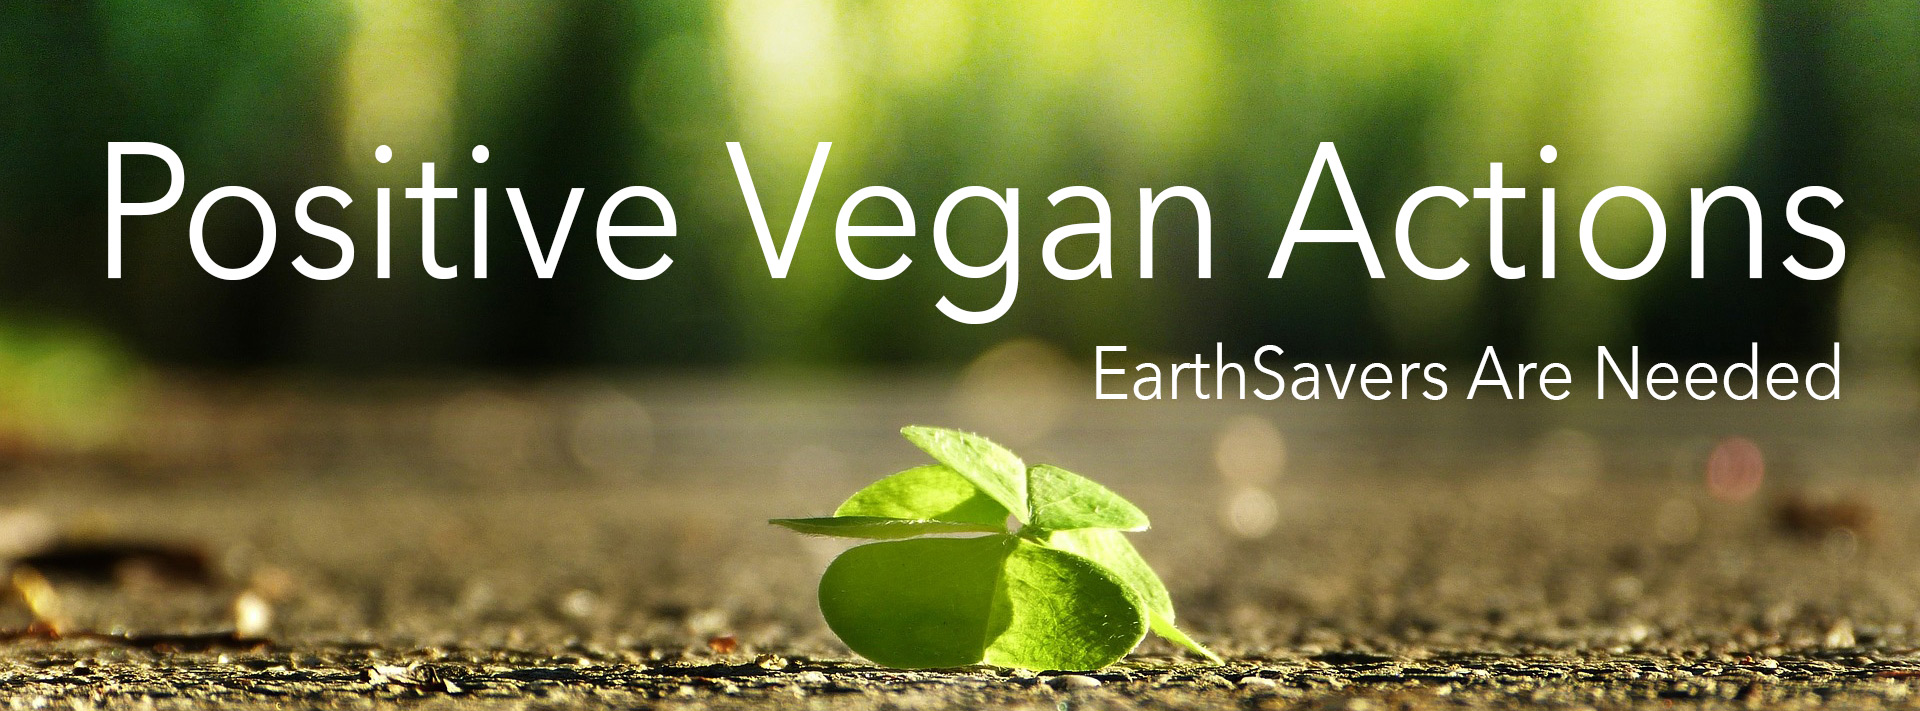 Positive Vegan Action Banner